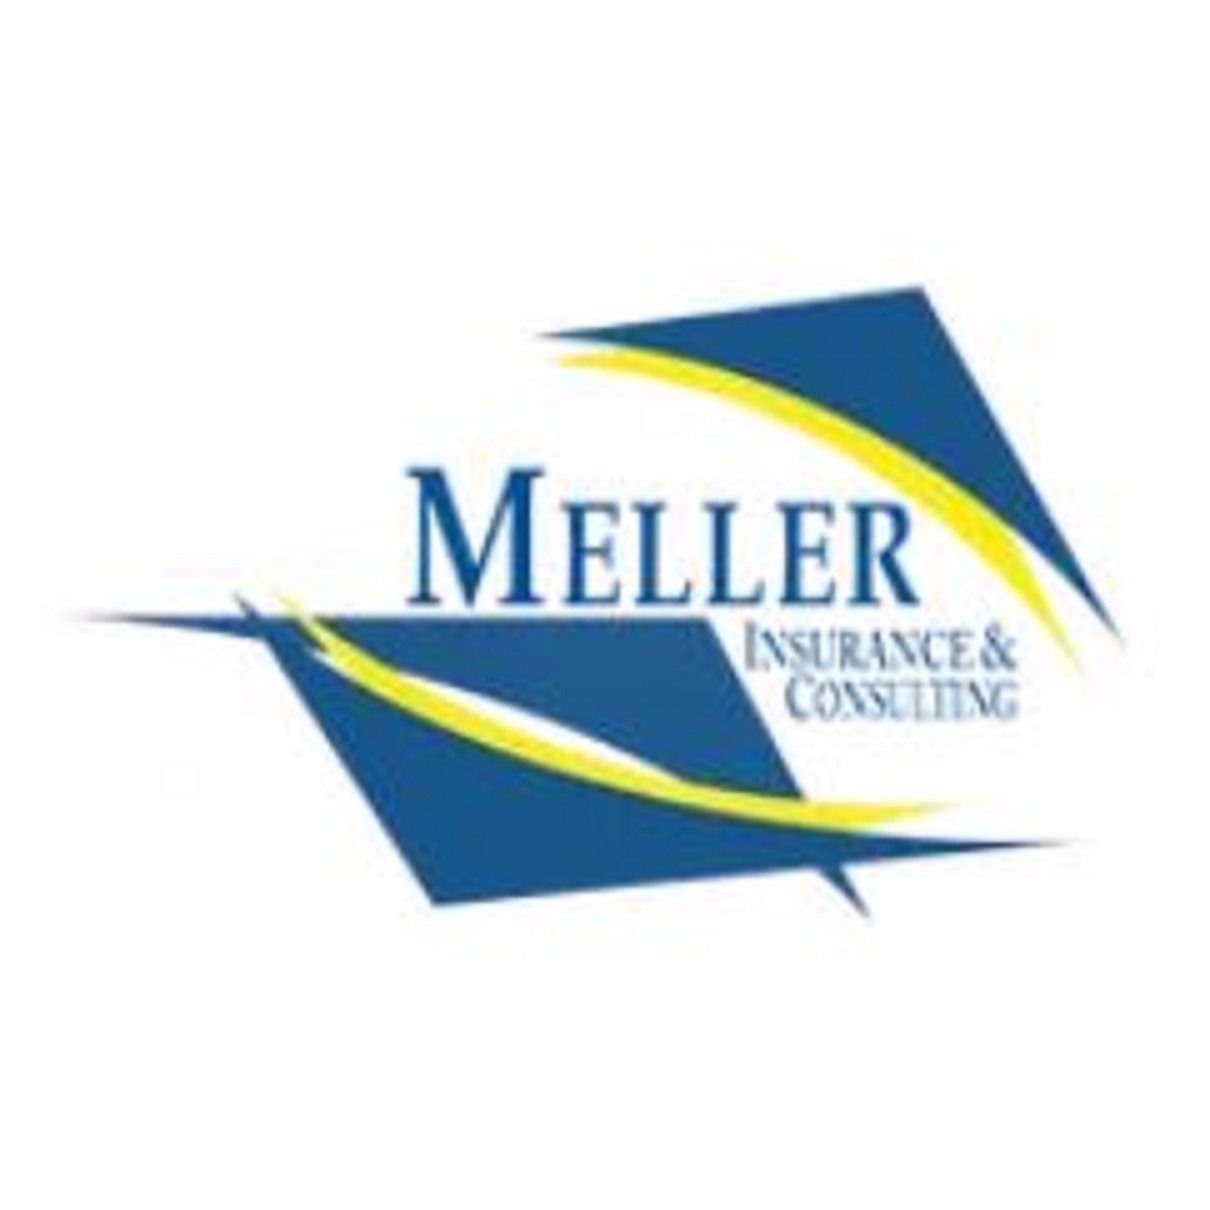 Meller Insurance & Consulting - Colo, IA 50056 - (641)377-2971 | ShowMeLocal.com